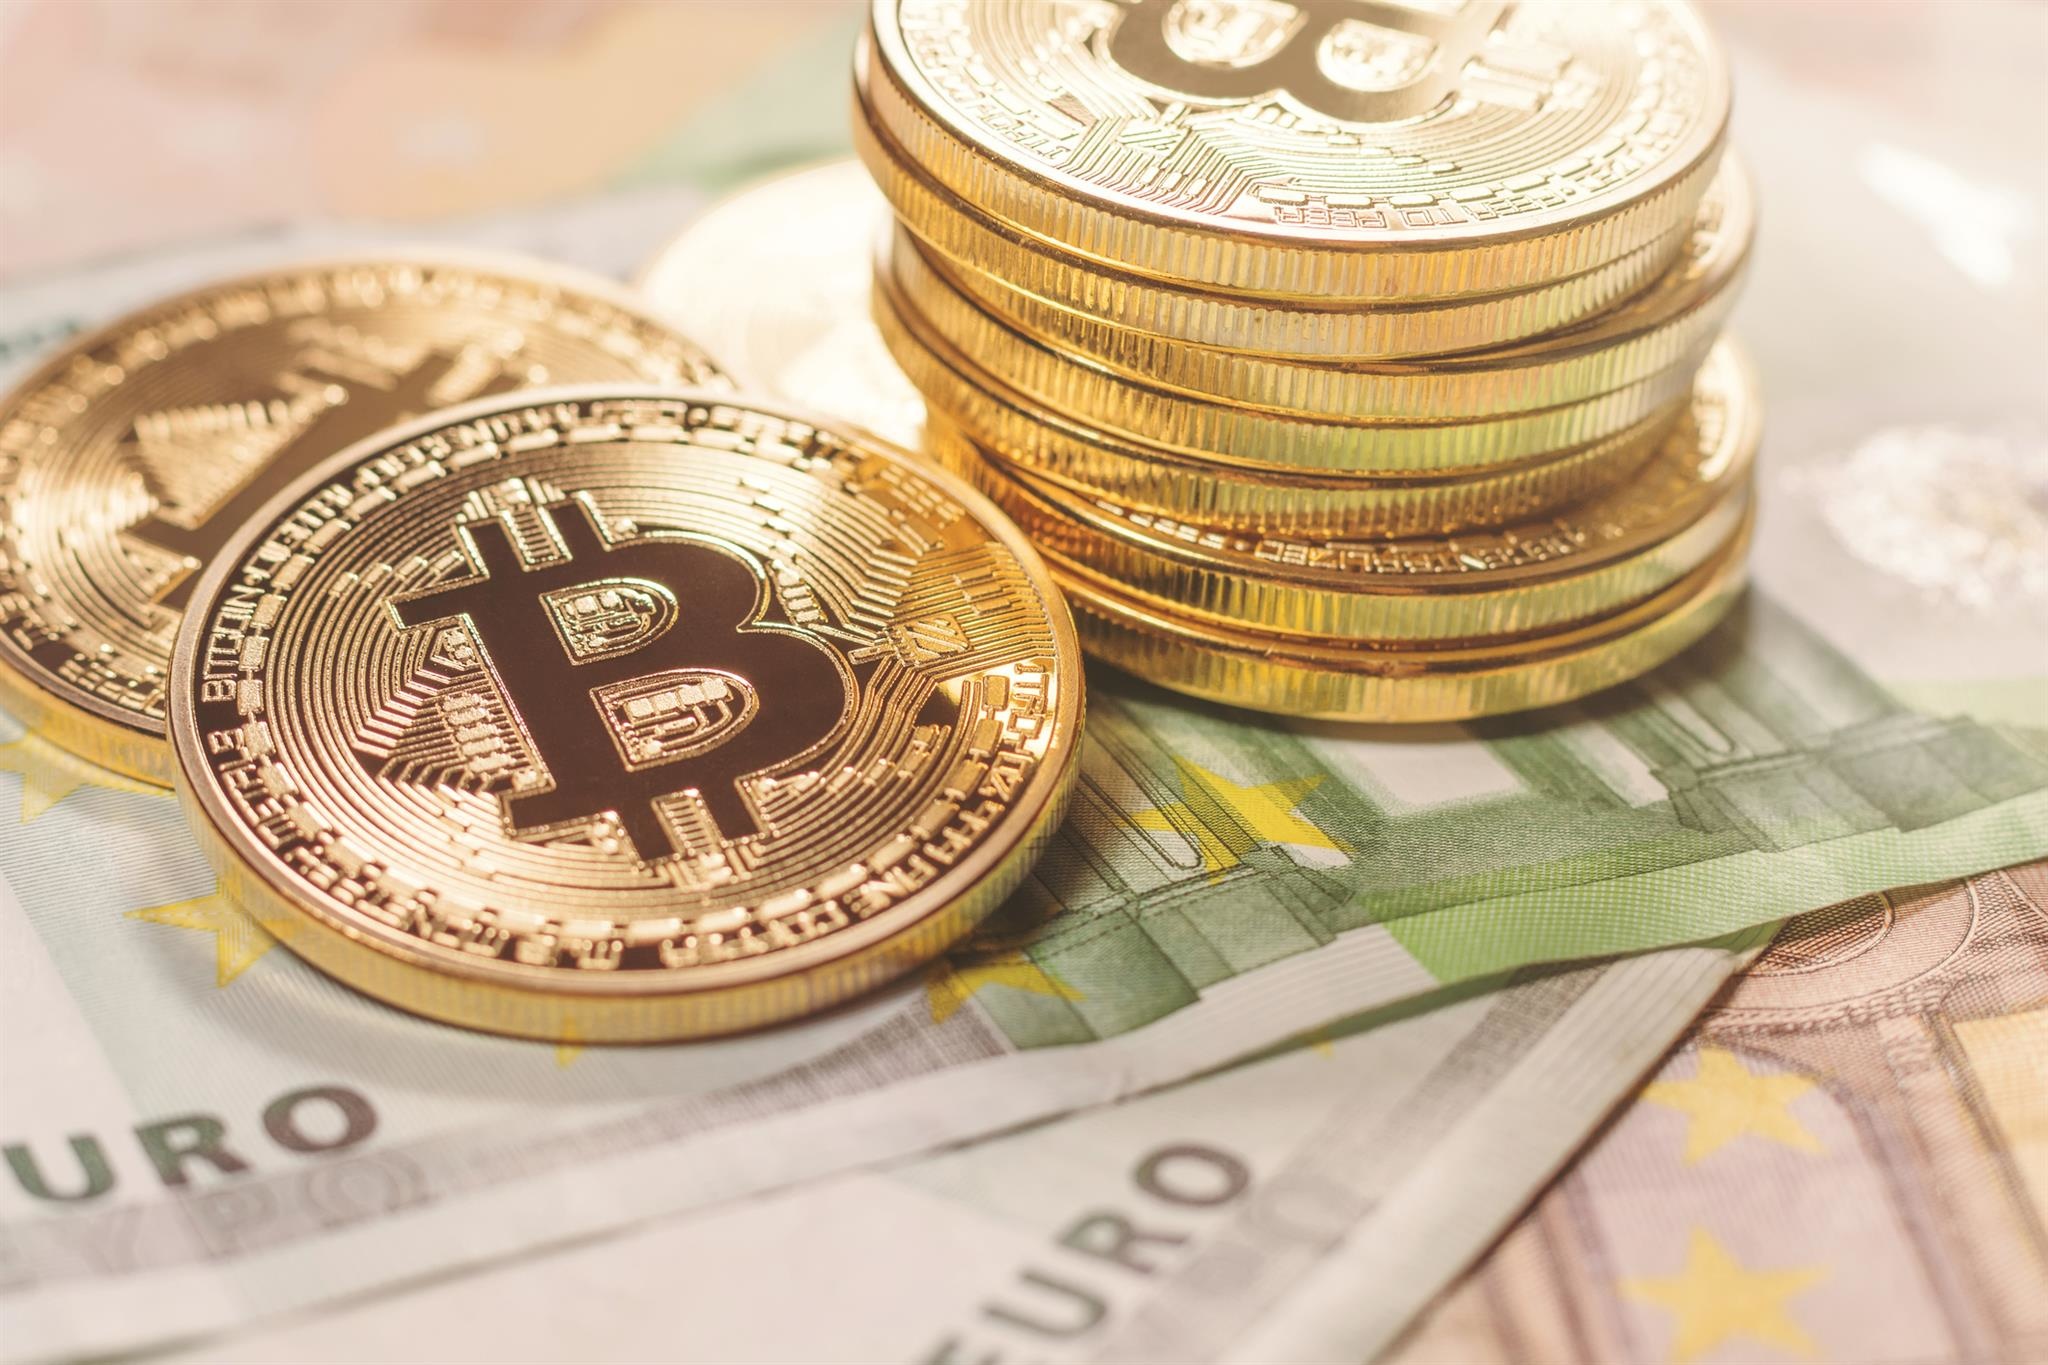 0.0001 bitcoins to euros